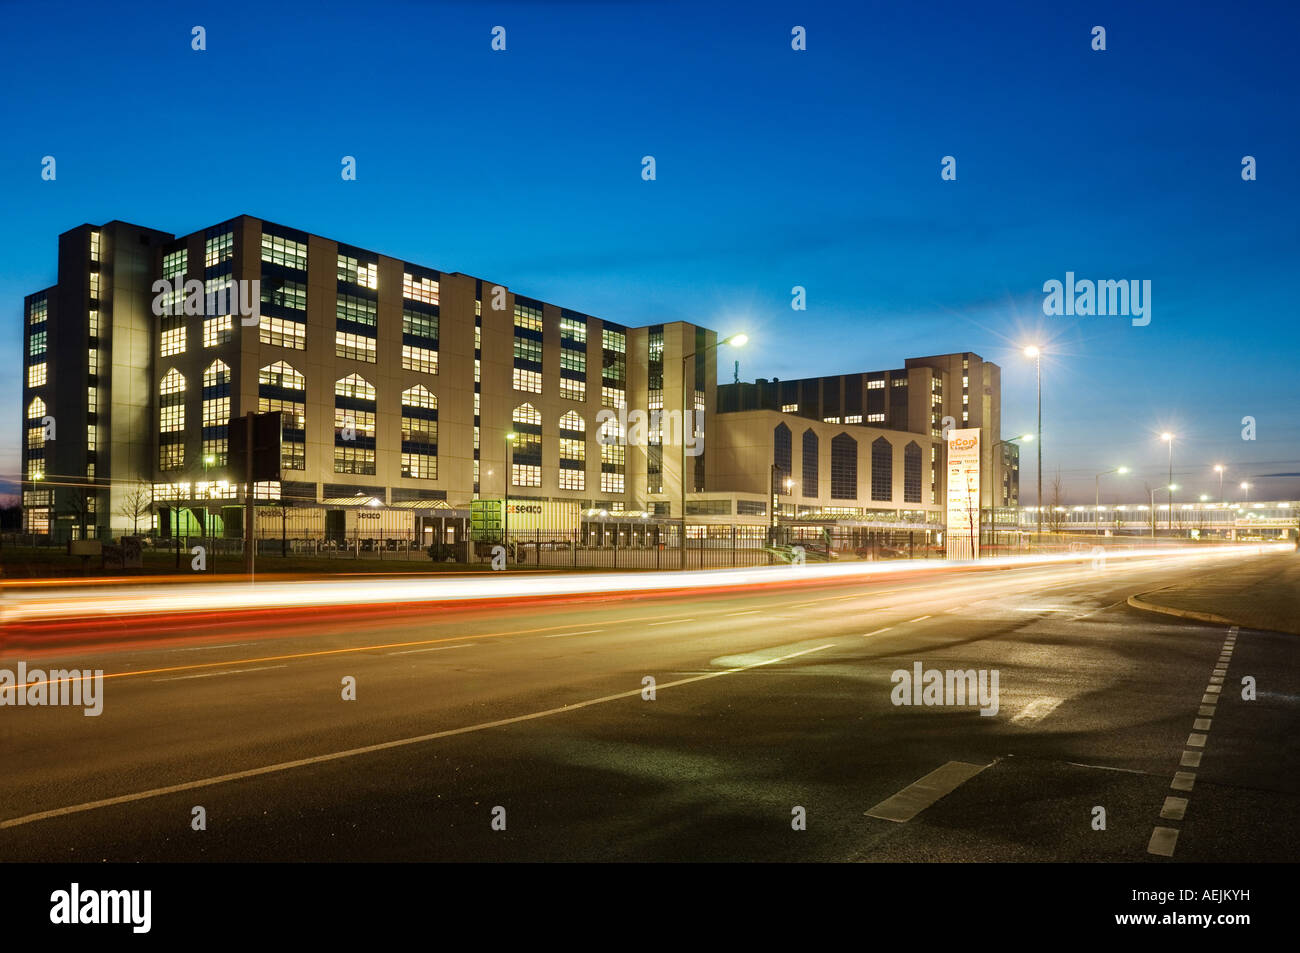 Headquarters of eCom-Logistik, evening, Falkensee, Havelland, Germany Stock Photo